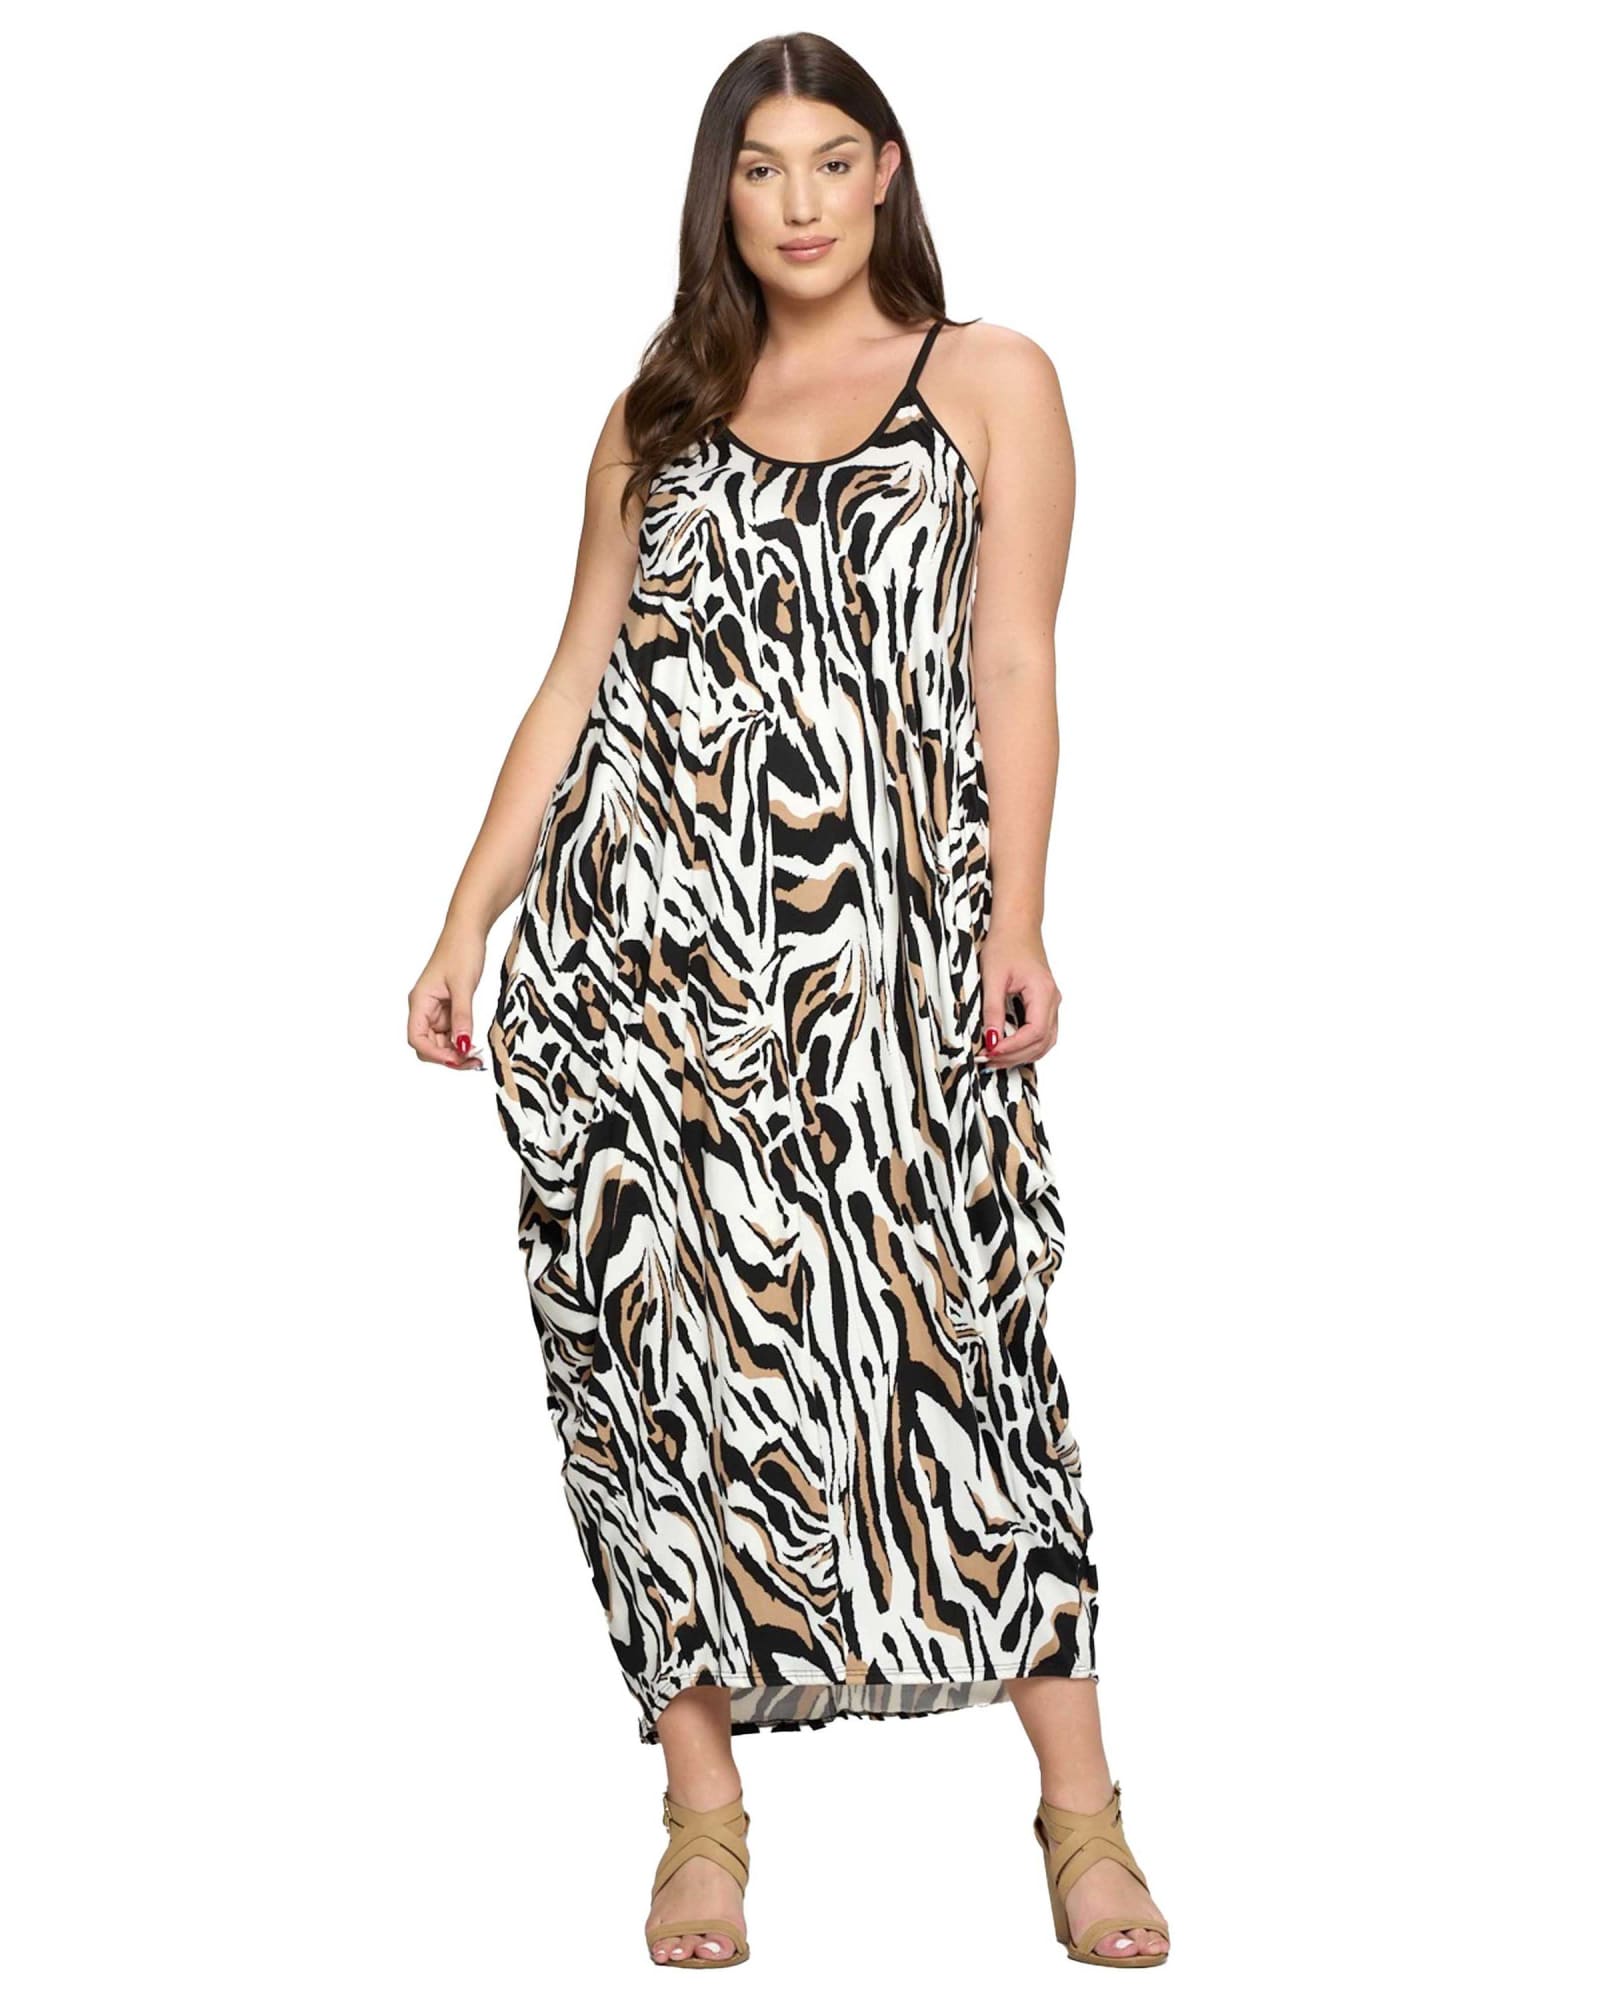 Tiger Stripe Dress | Ivory/Black/Taupe